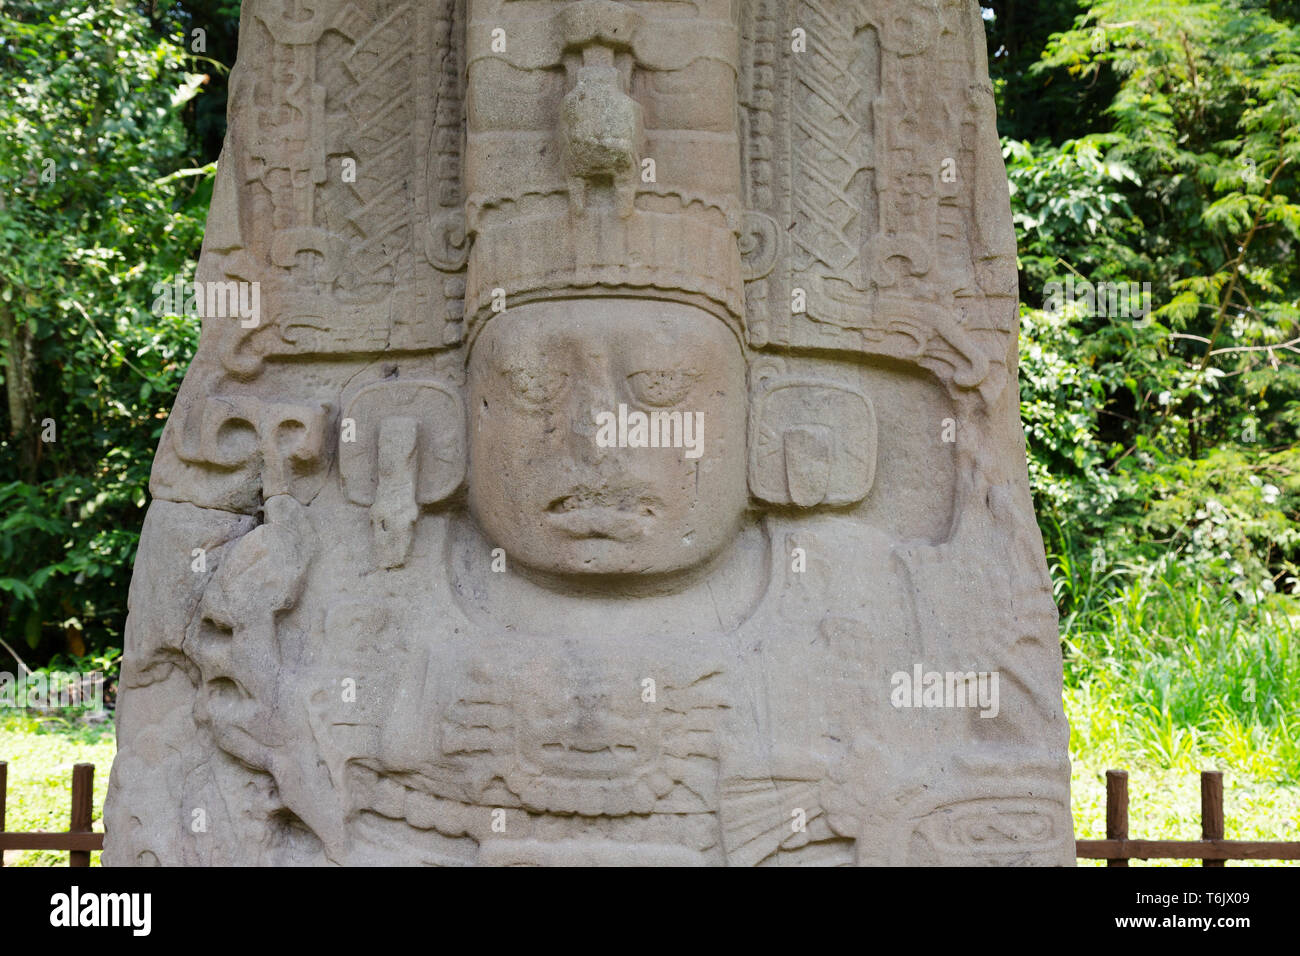 Maya Ruinen - Standing Stone Stele K durch Herrscher Jade Sky im 9. Jahrhundert AD; UNESCO Weltkulturerbe Quirigua, Guatemala Lateinamerika errichtet. Stockfoto